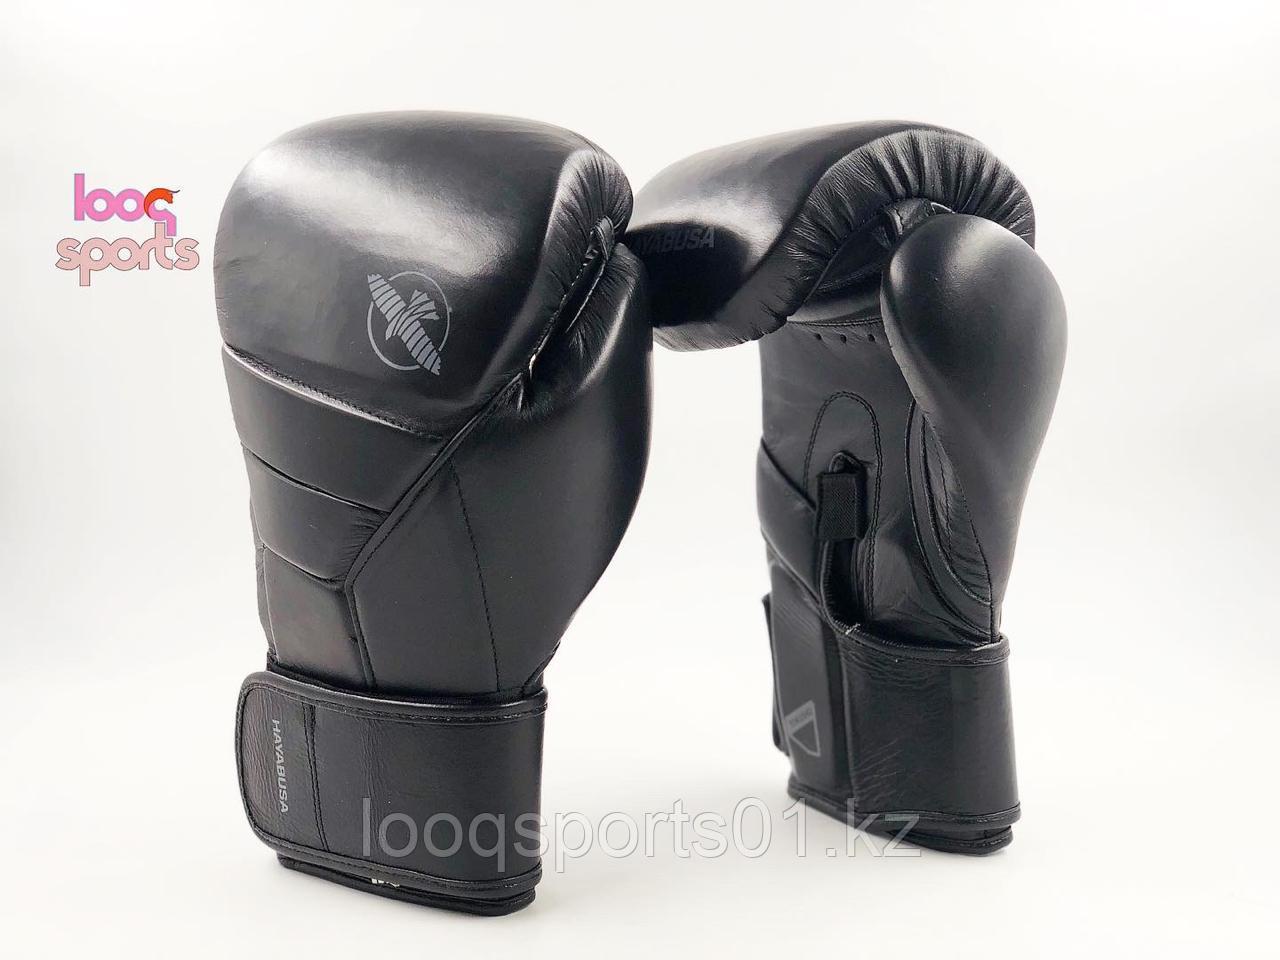 Боксерские перчатки Hayabusa кожа (12,14)